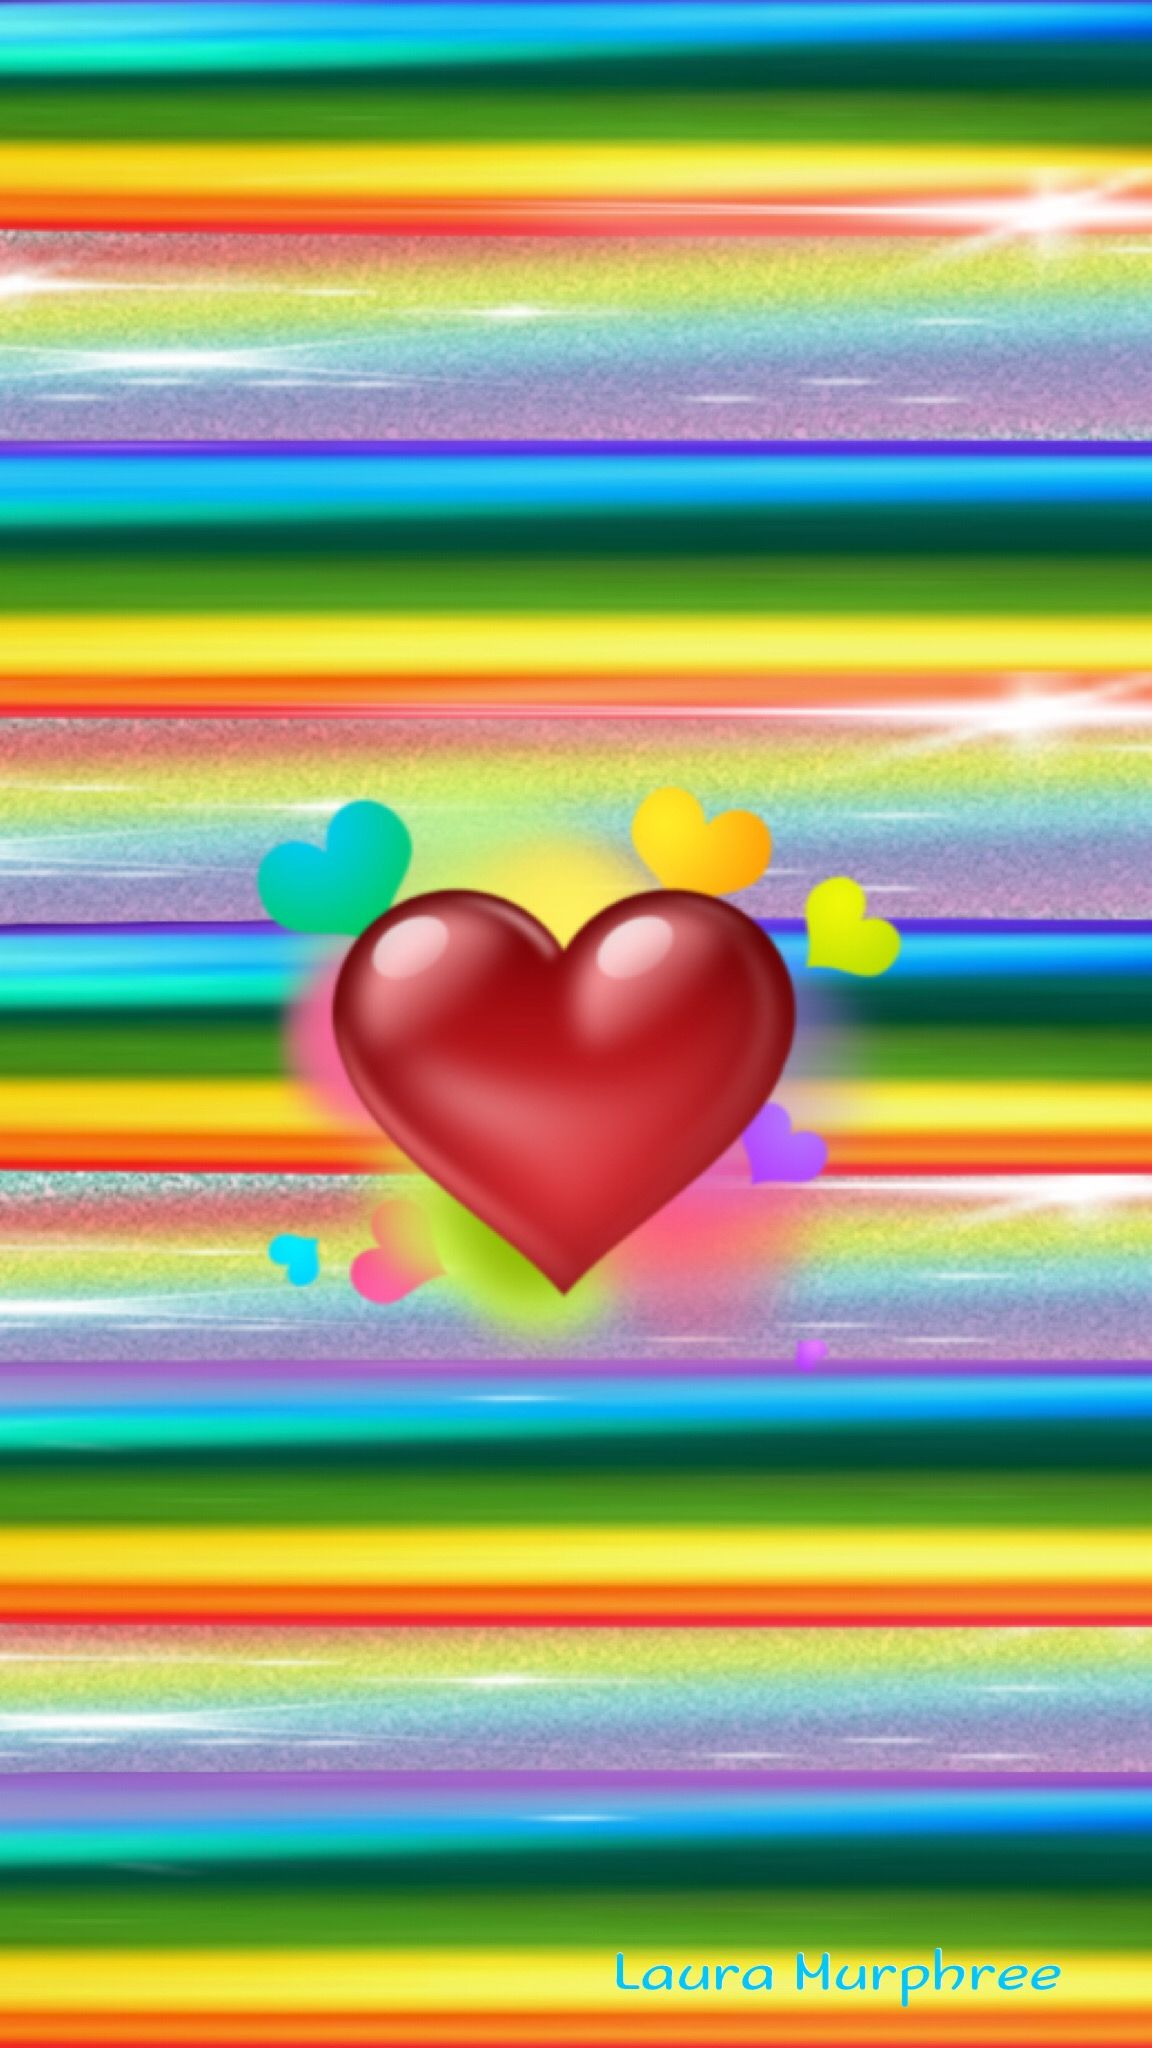 1152x2048 Rainbow heart phone wallpaper colorful background | Valentines wallpaper iphone, Heart wallpaper, Valentines wallpaper